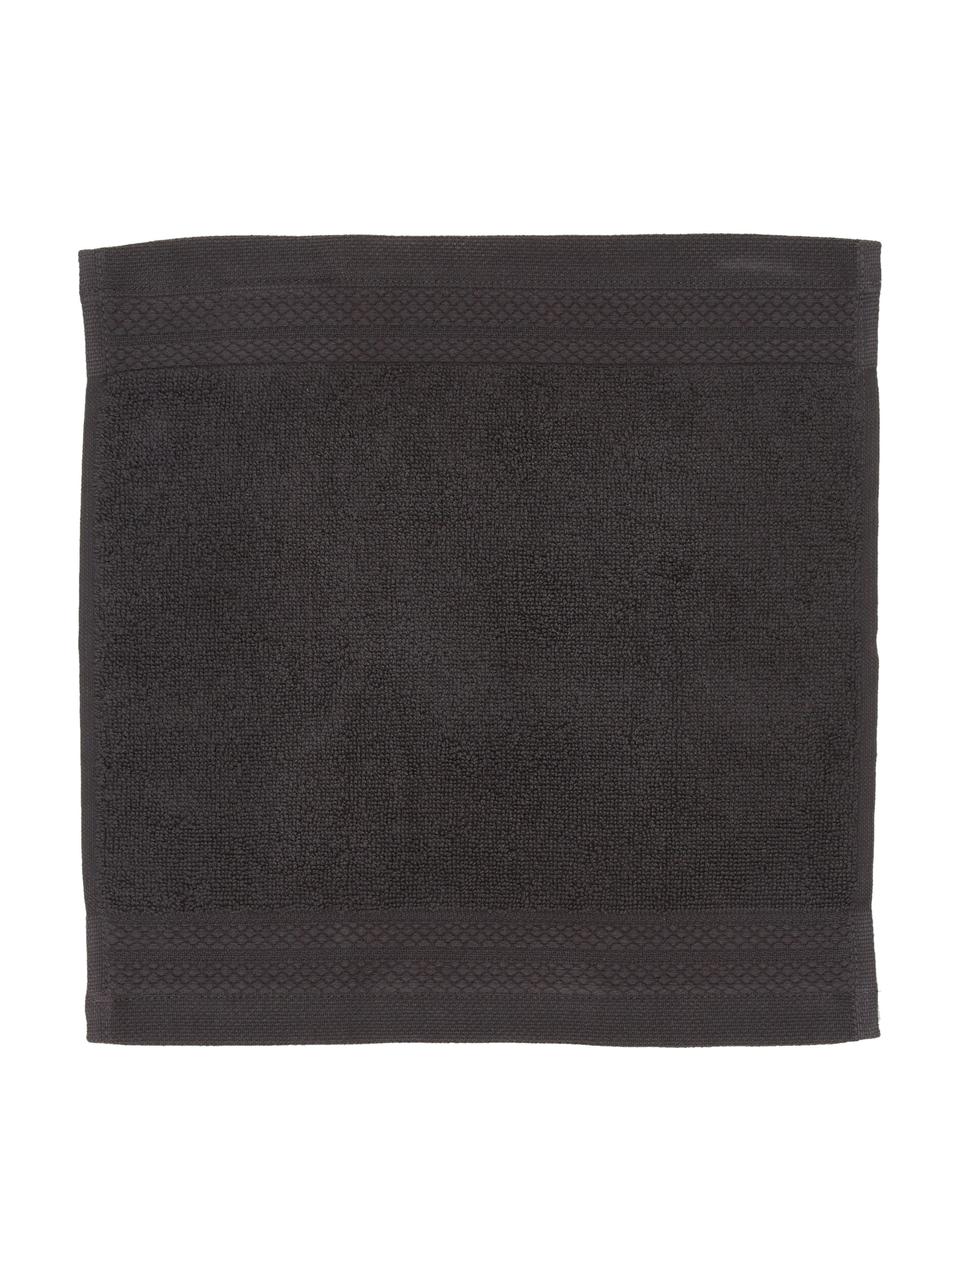 Toalla de algodón ecológico Premium, diferentes tamaños, Negro, Toalla tocador, An 30 x L 30 cm, 2 uds.